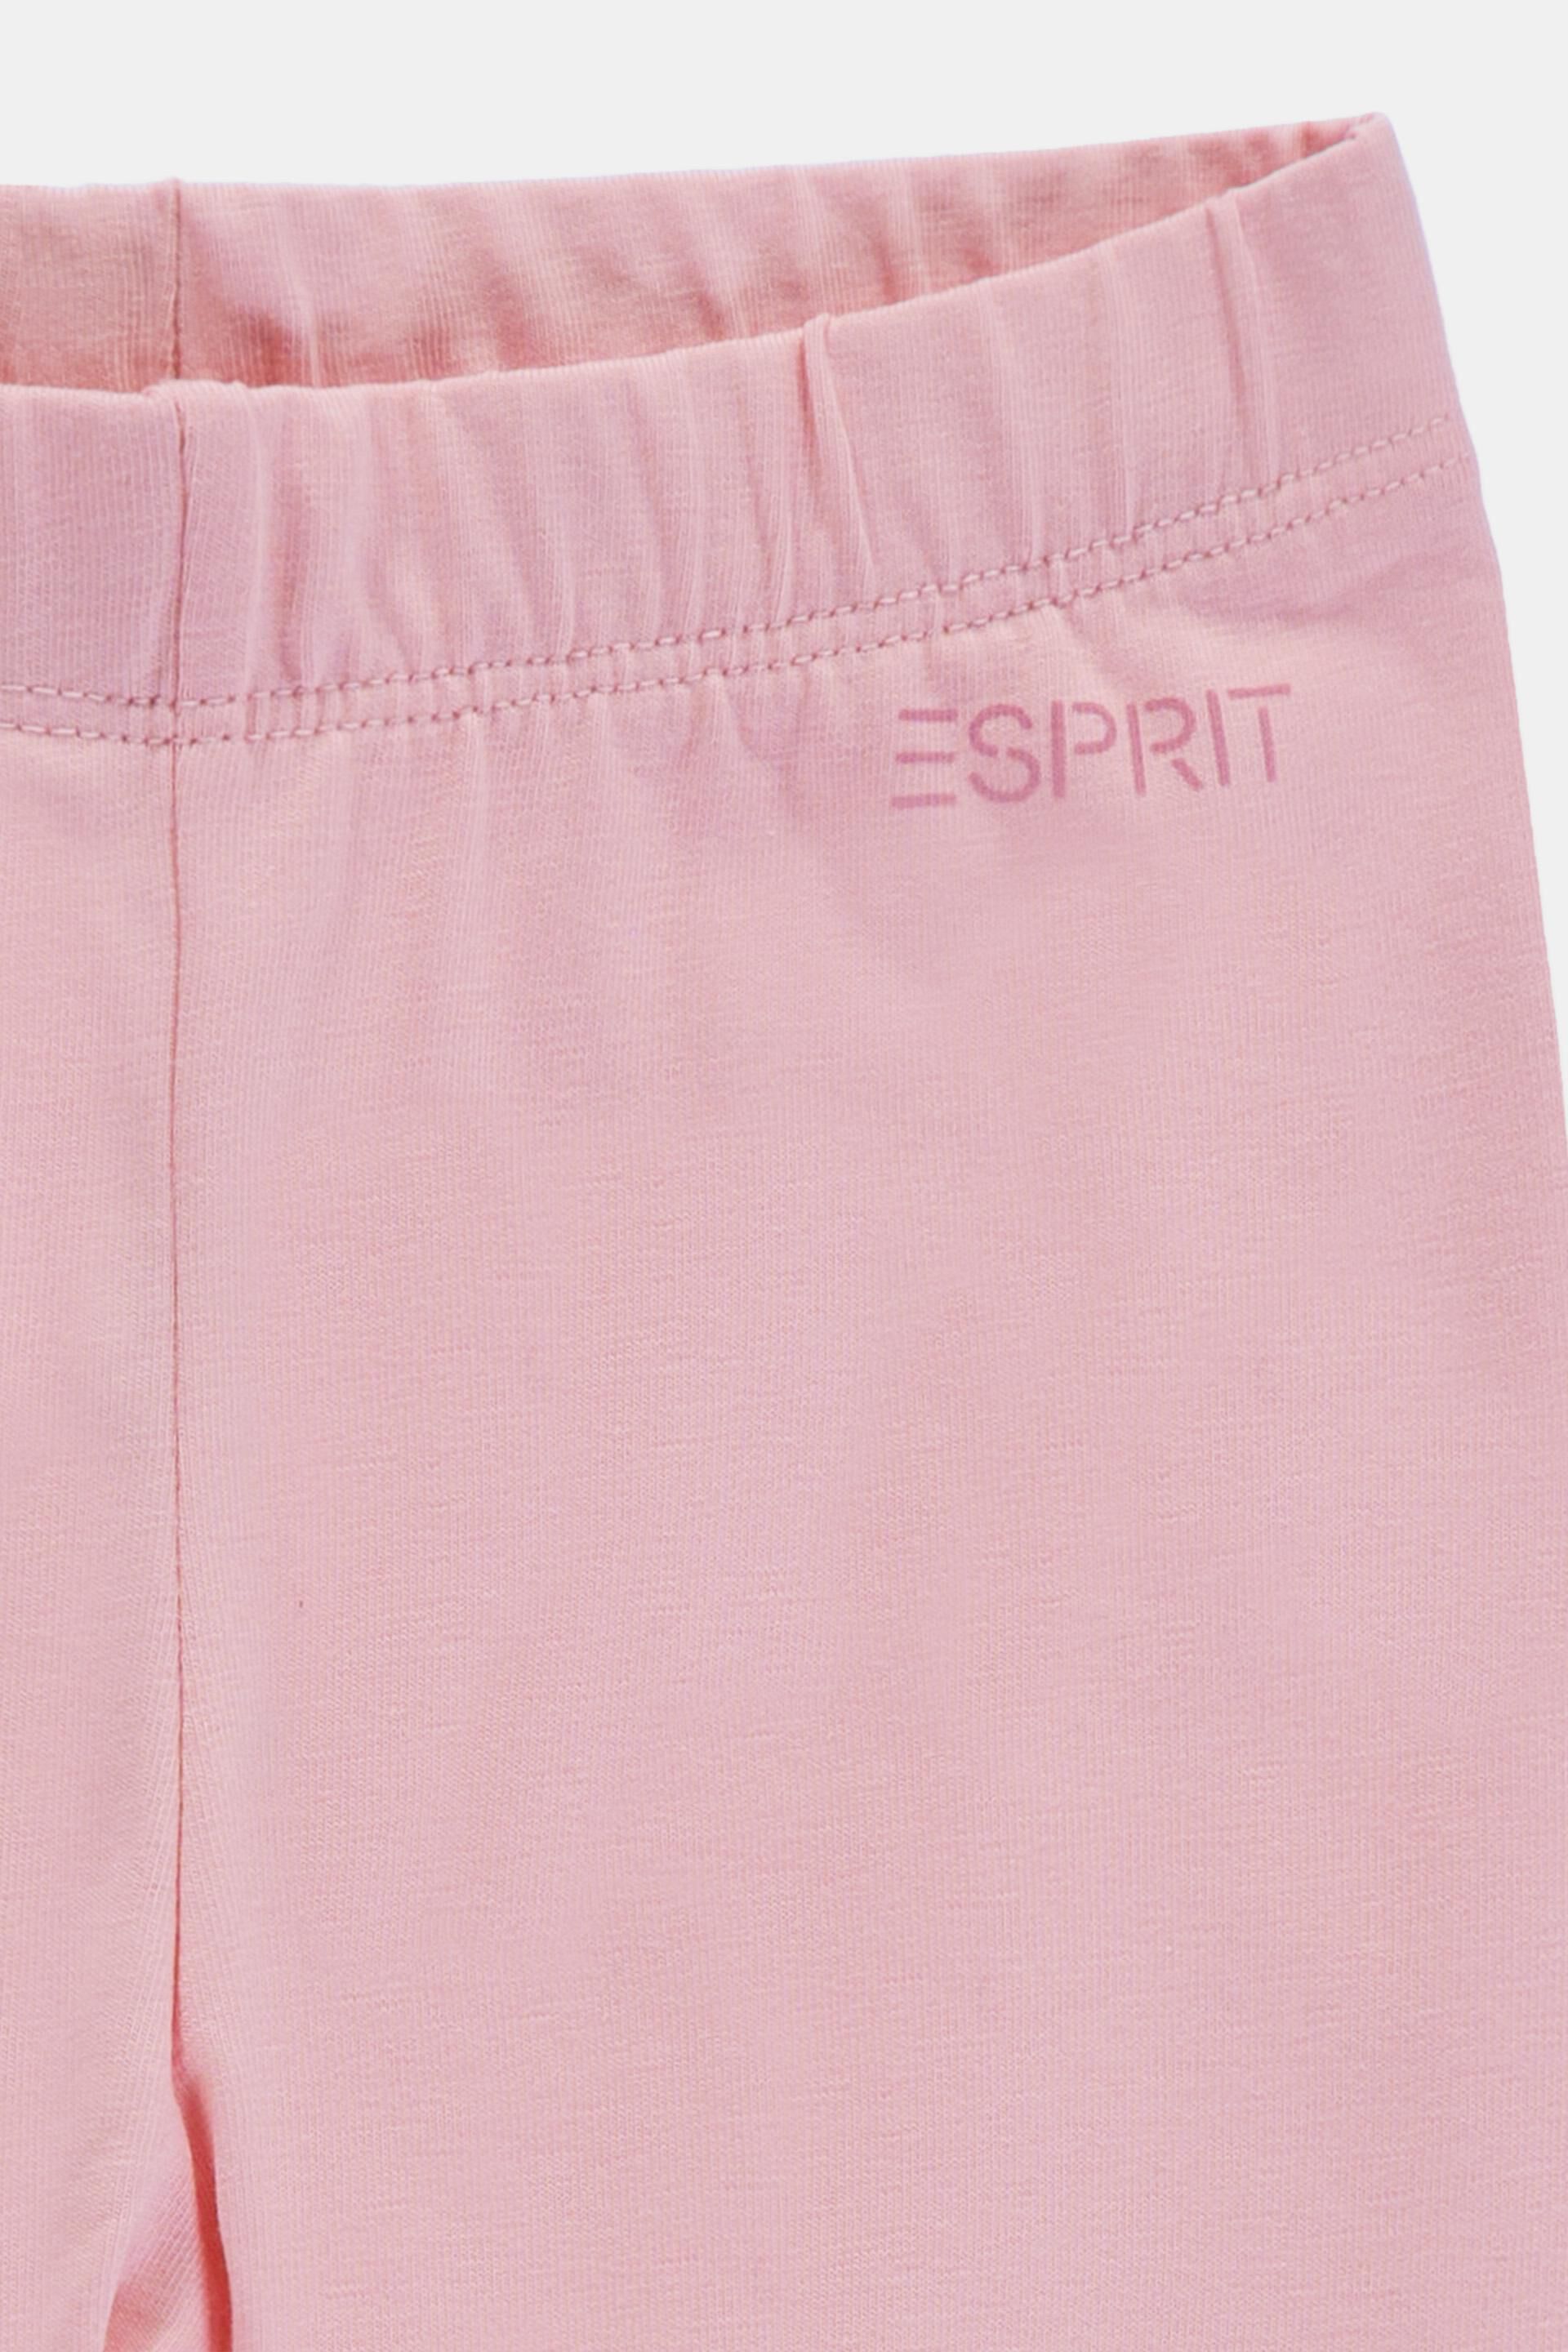 Esprit Outlet Leggings aus Stretch-Baumwolle